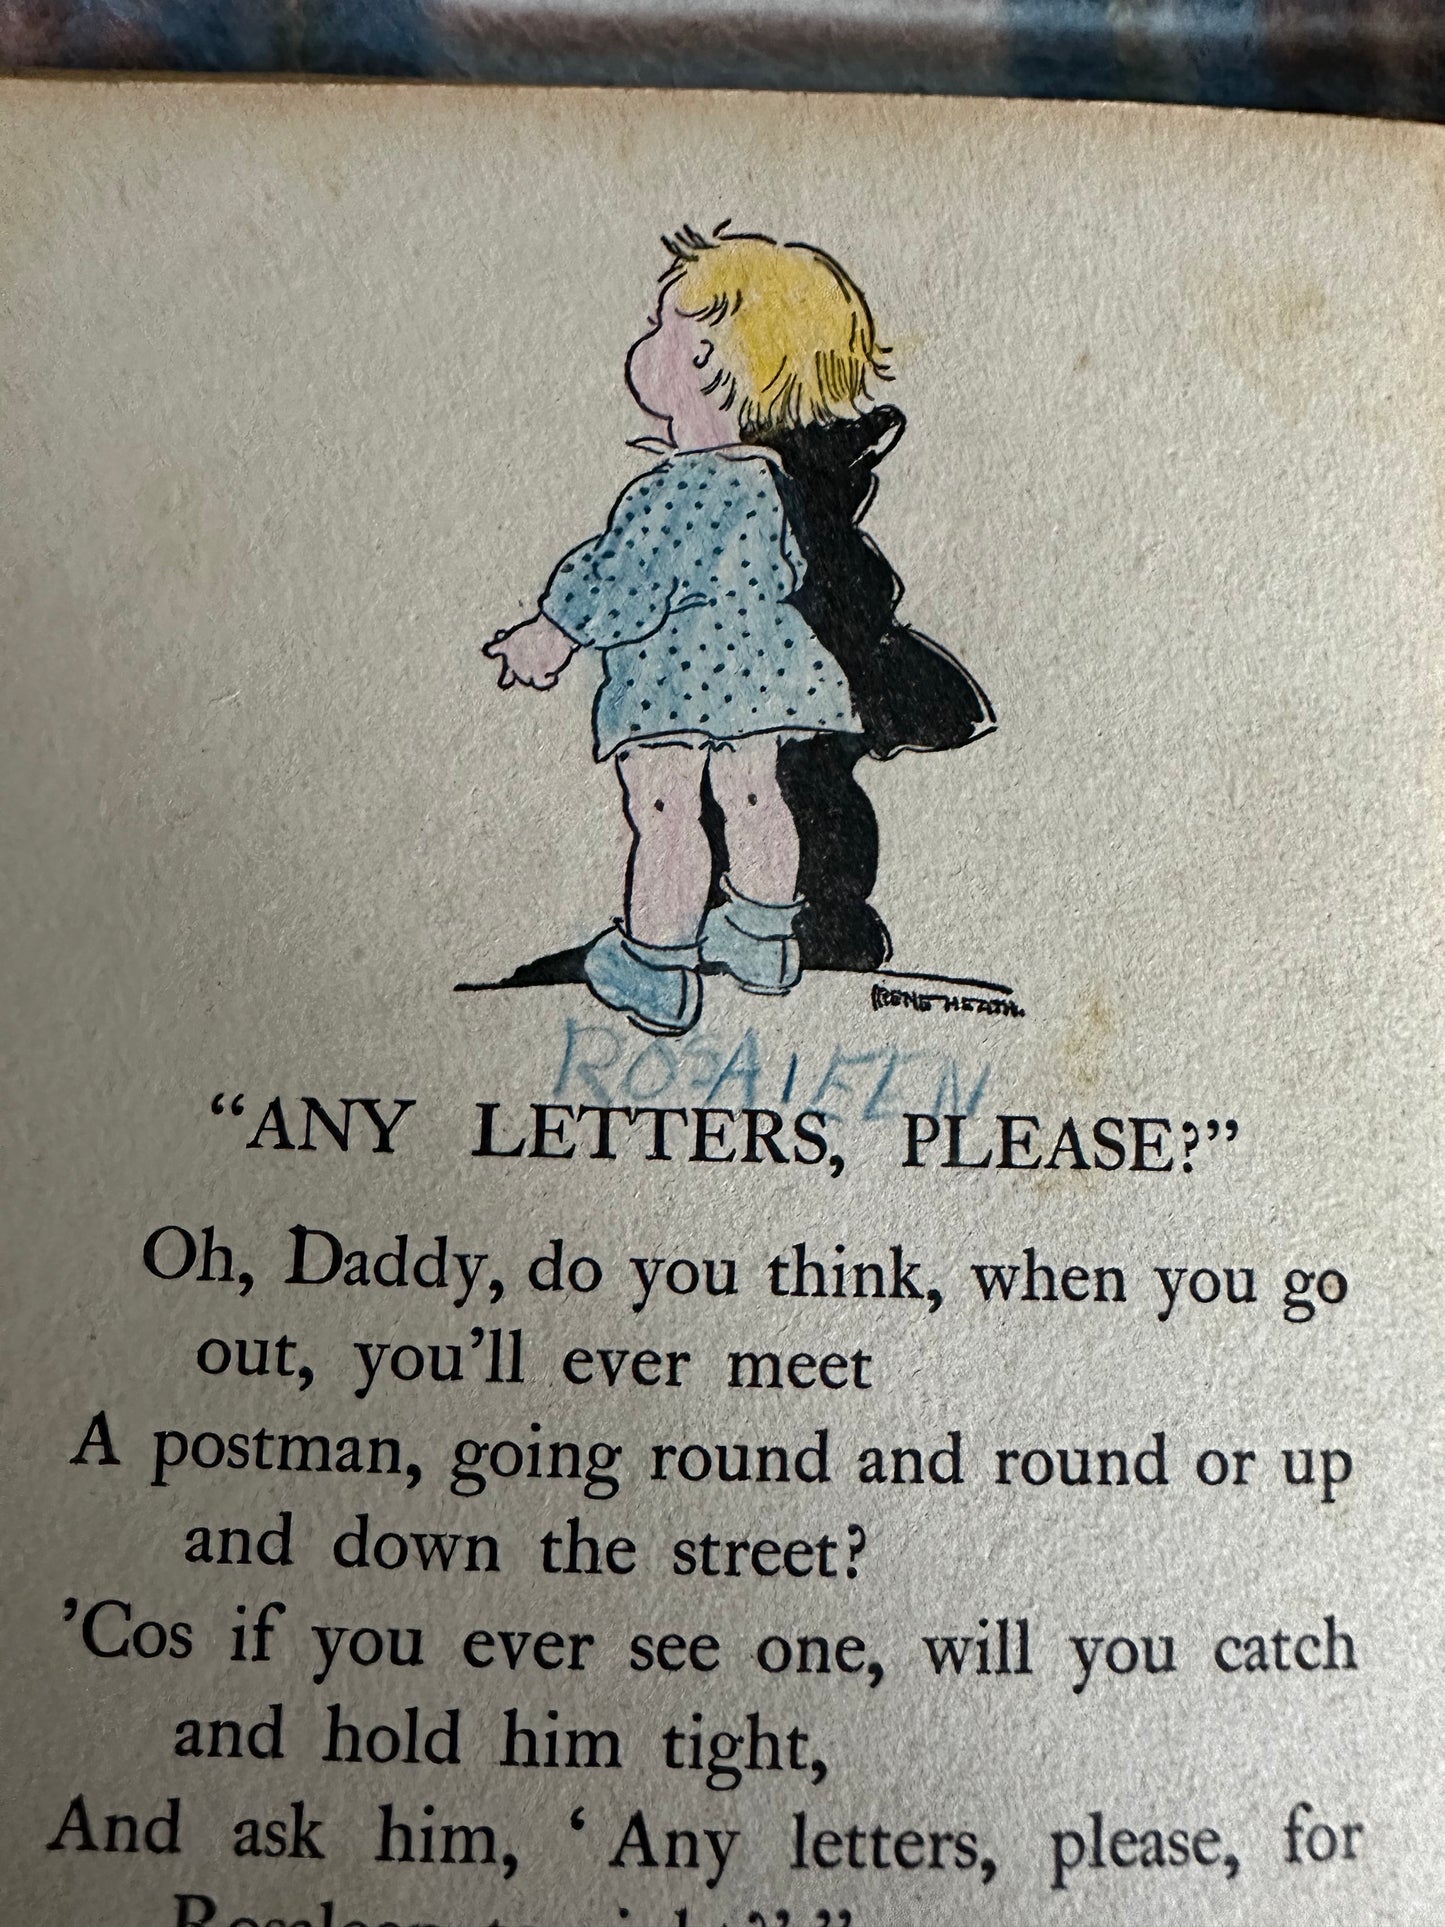 1930’s A Bunch Of Children’s Stories (Blackie & Son Co Ltd)